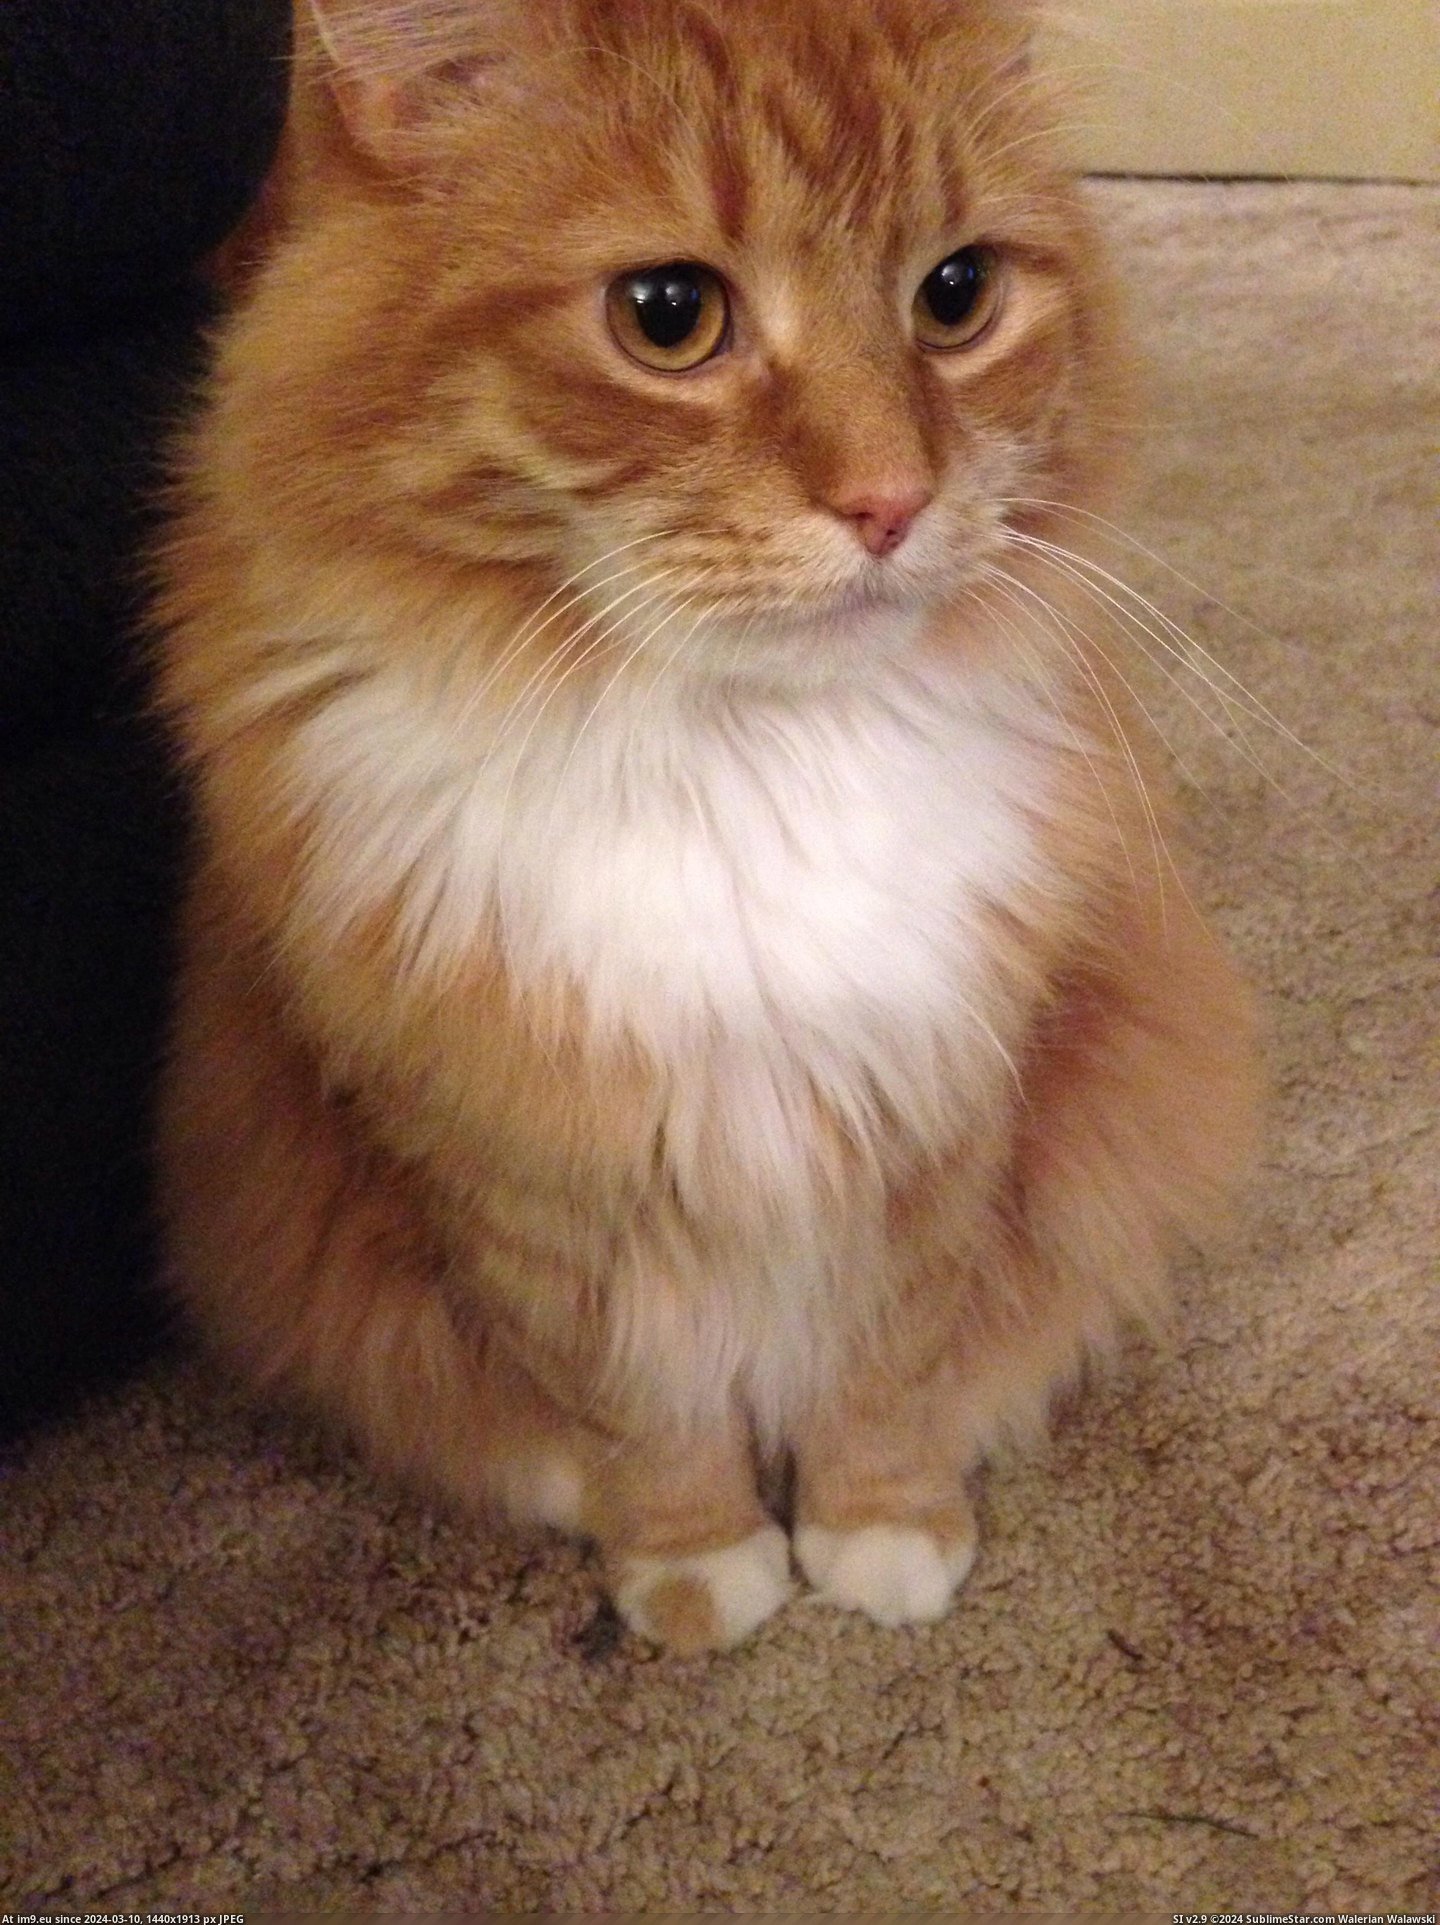 #One #Orange #Toe #Cat [Mildlyinteresting] My cat has one orange toe 2 Pic. (Image of album My r/MILDLYINTERESTING favs))